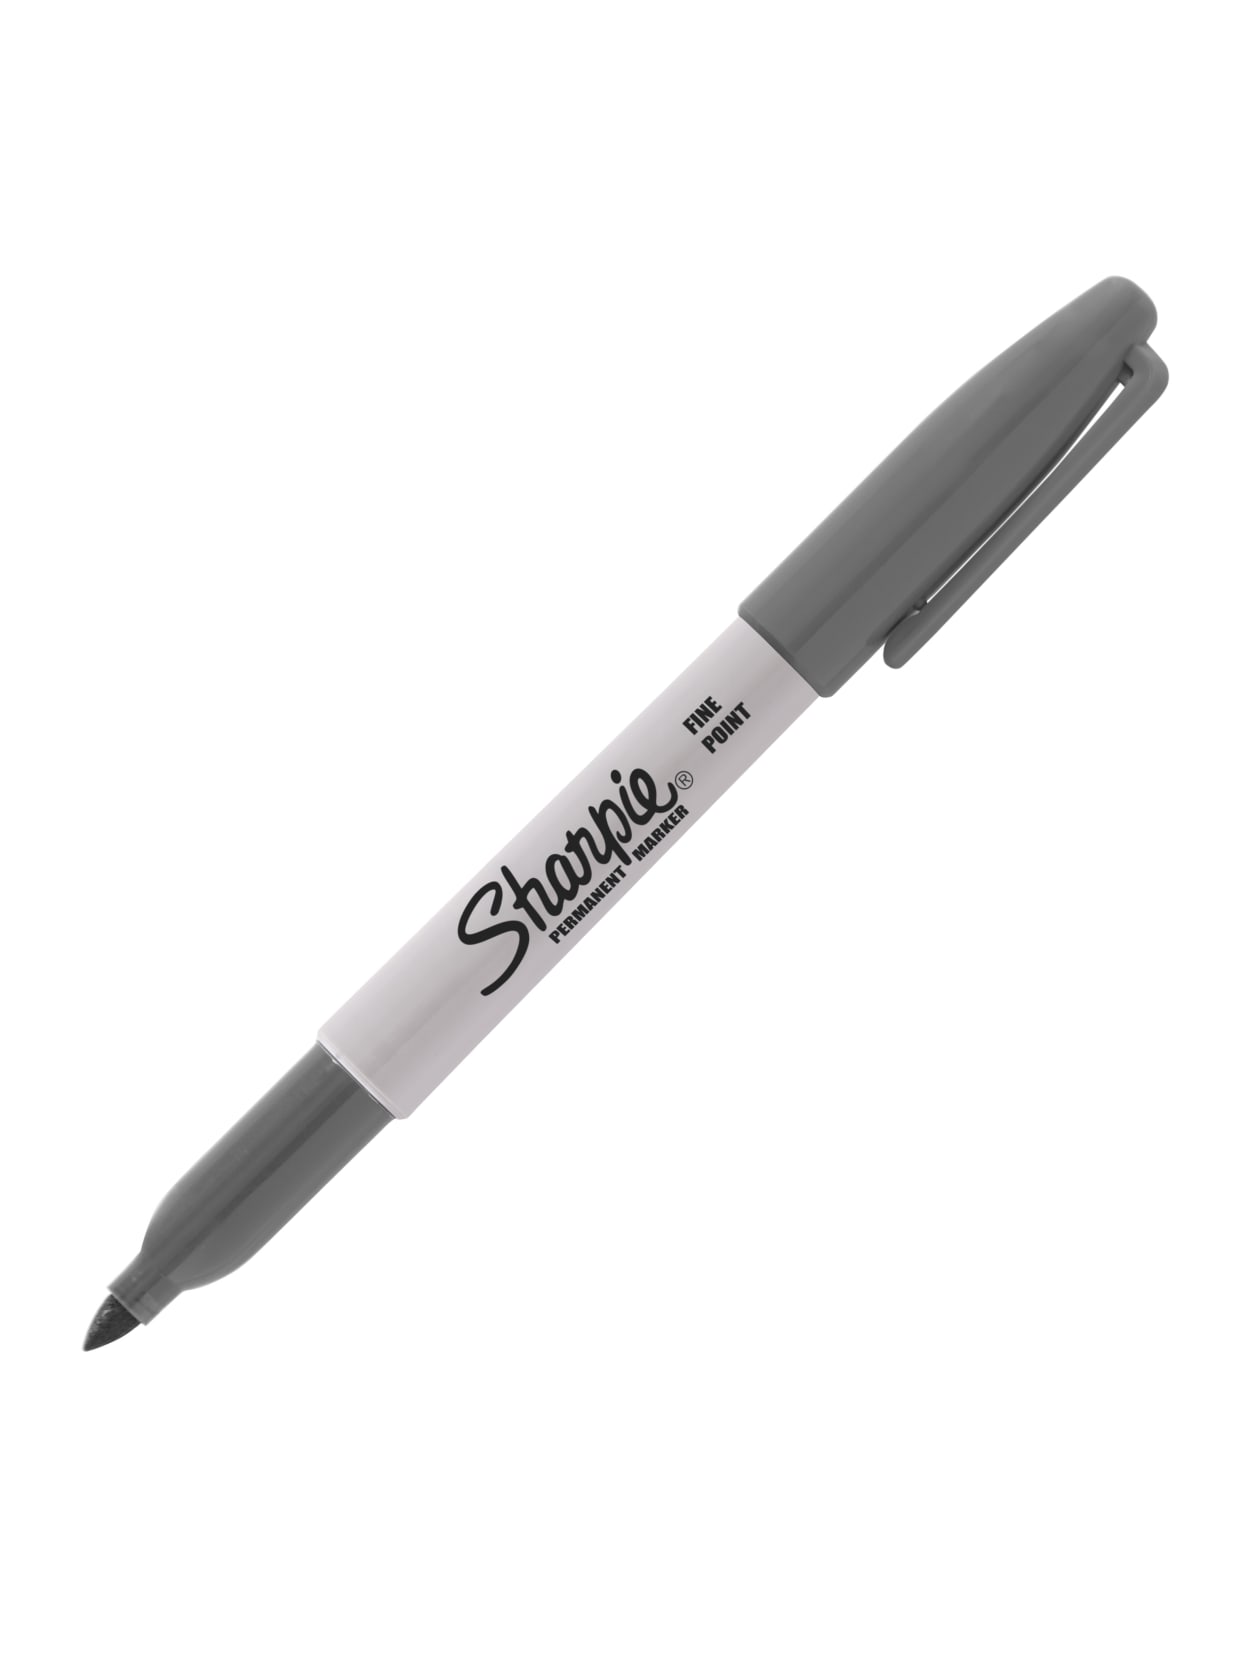 grey permanent marker pen